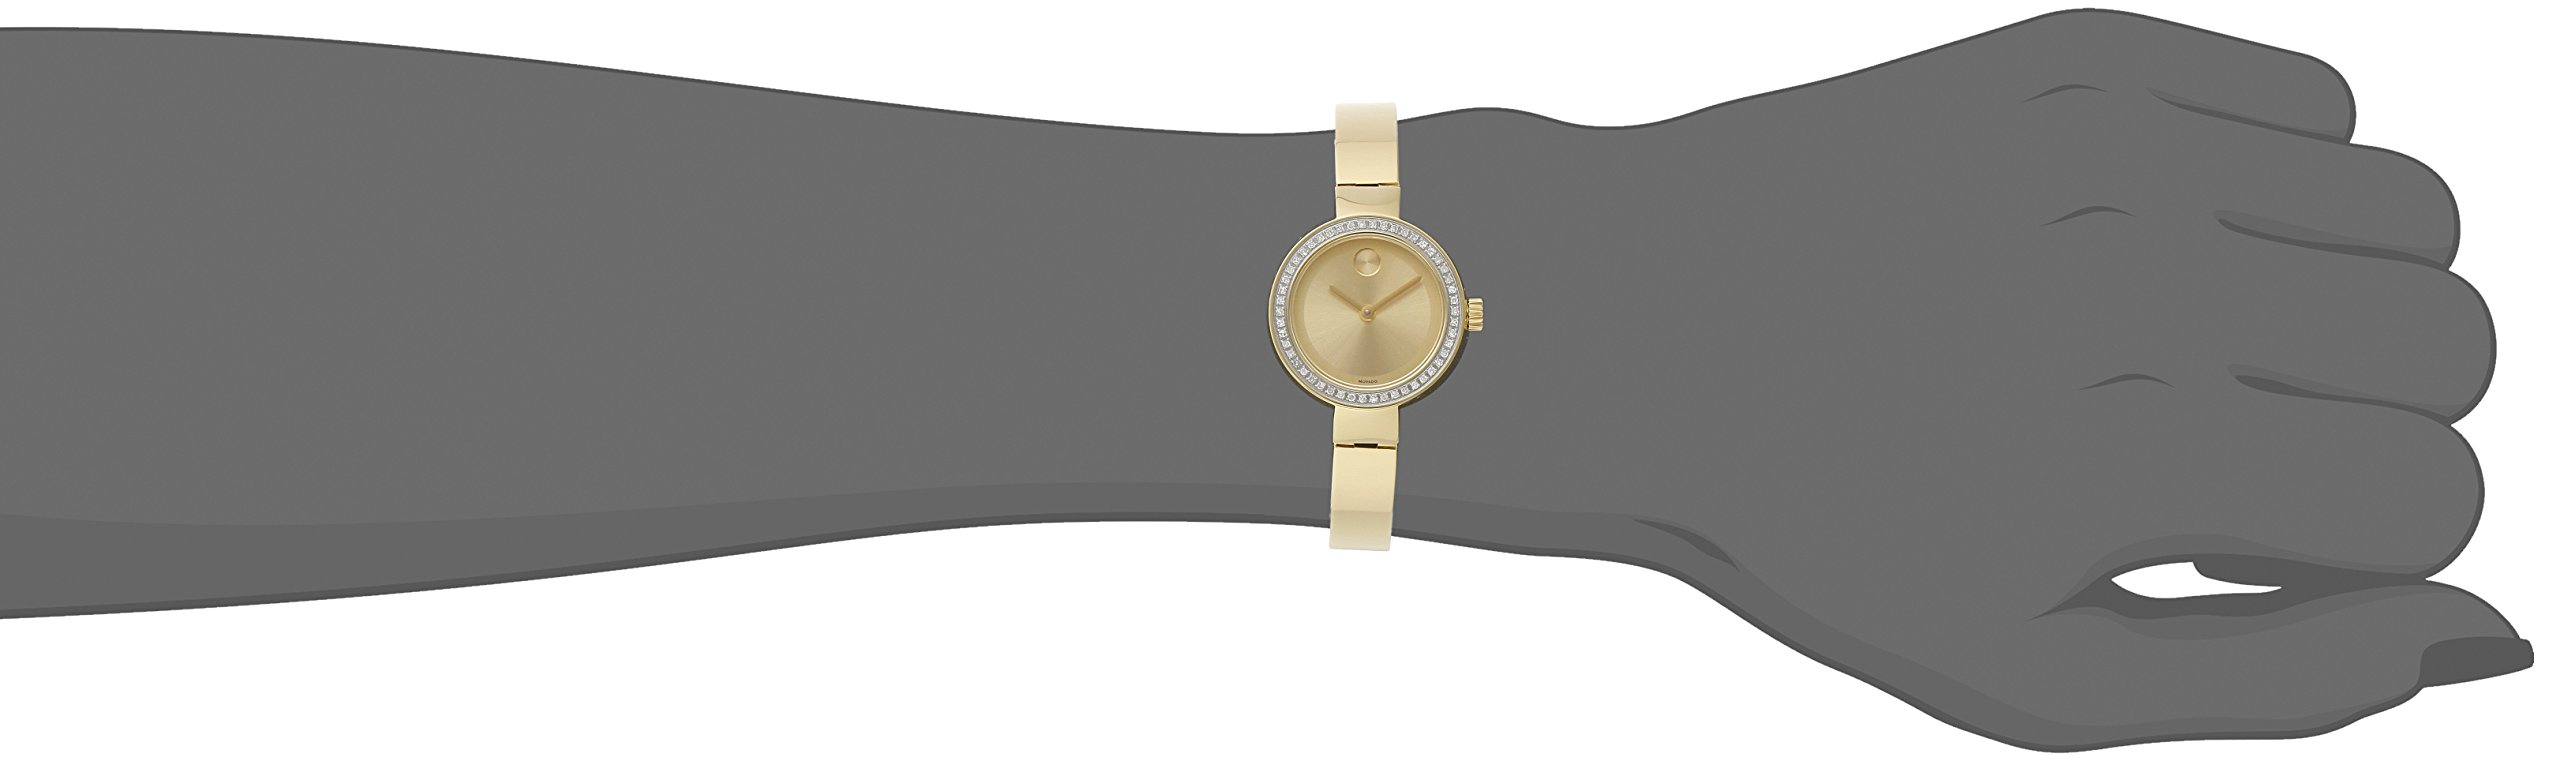 Movado Women's 3600322 Analog Display Swiss Quartz Gold Watch